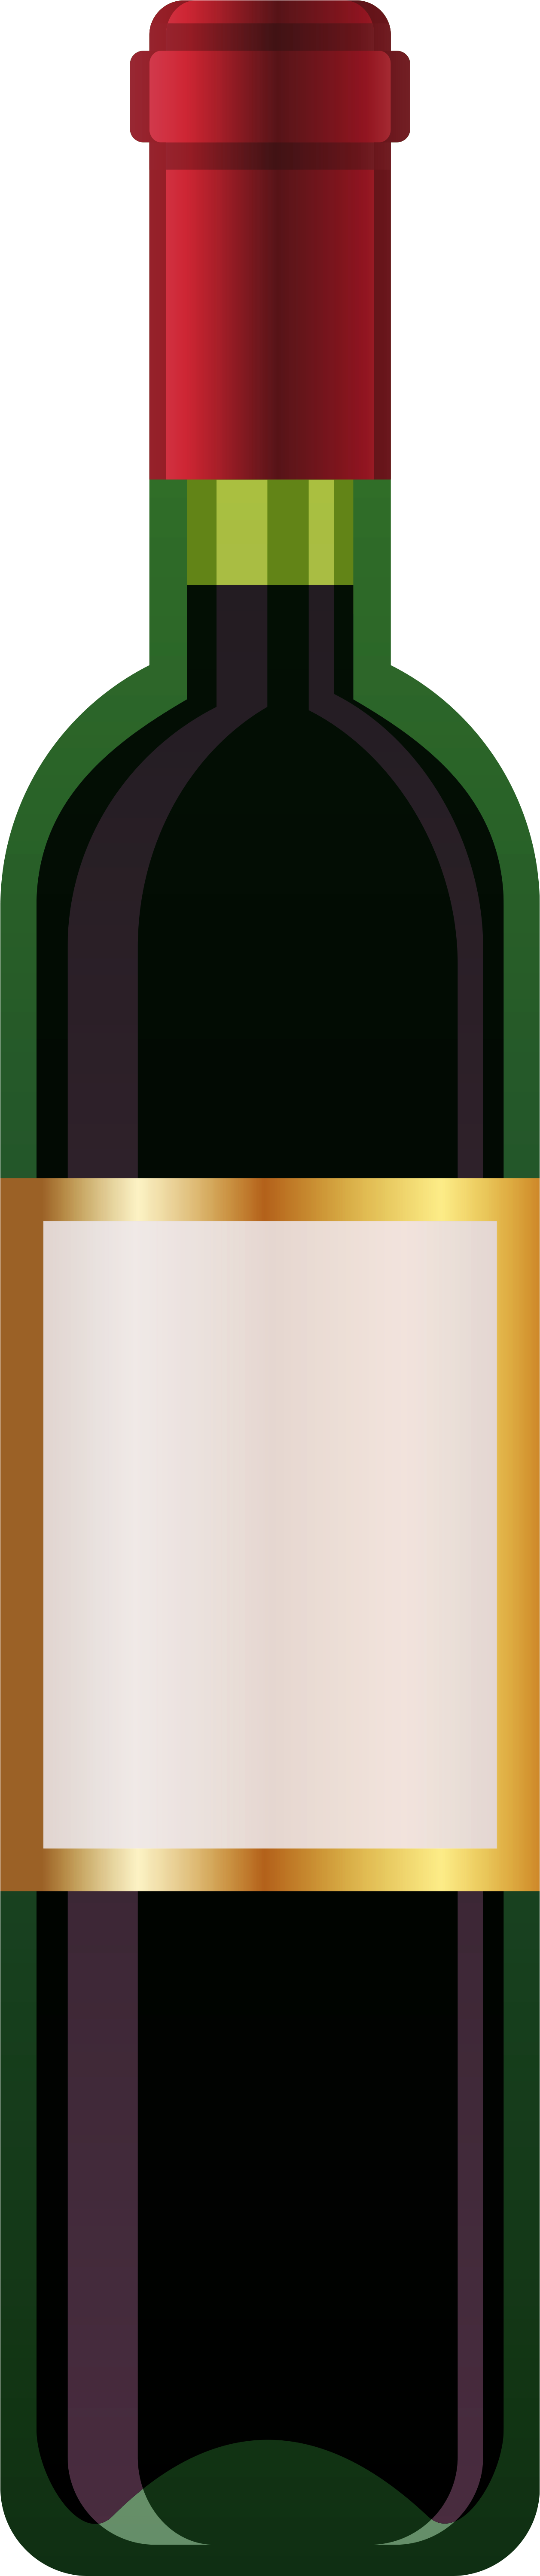 Bottle Of Wine Clipart - Wine Cooler (1524x6168)